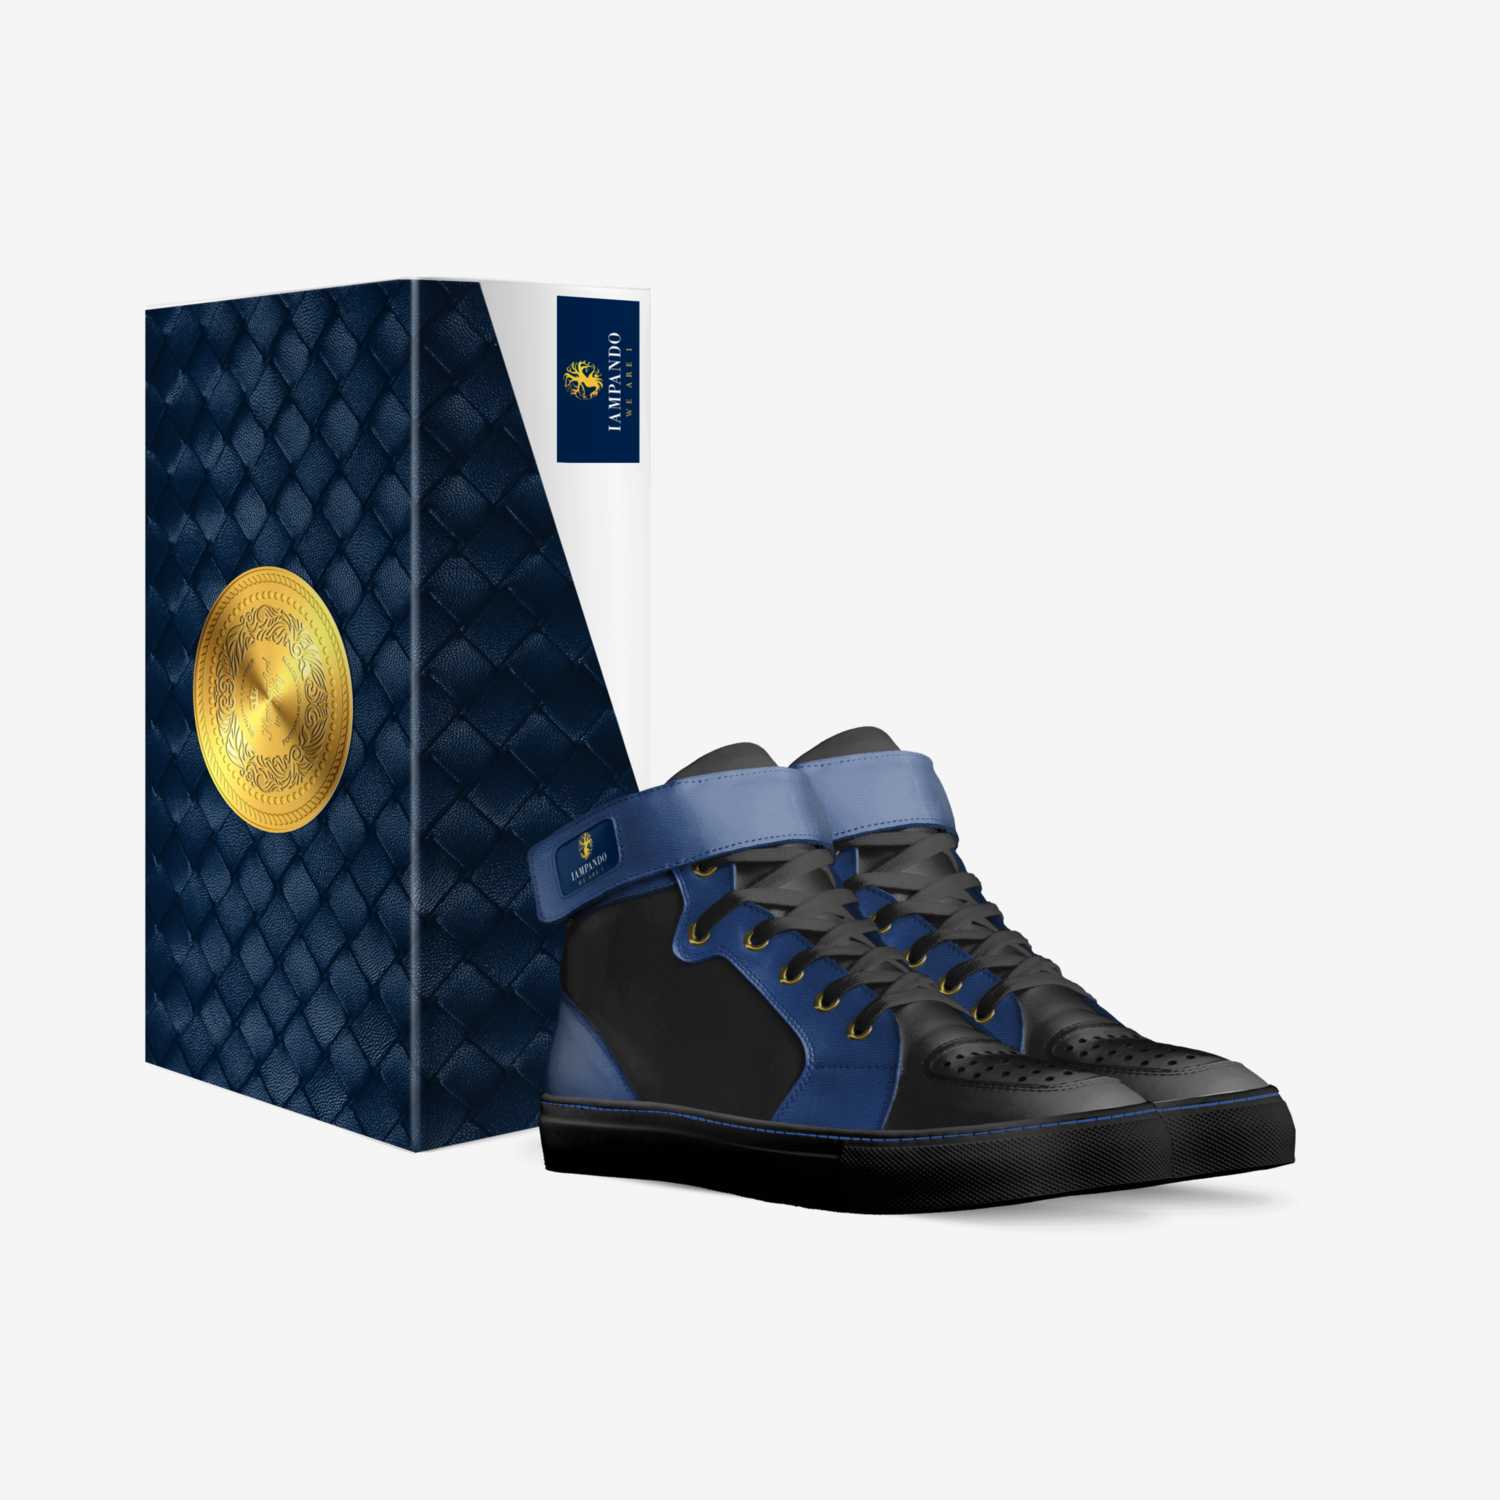 IamPando custom made in Italy shoes by Antonio Roberson | Box view